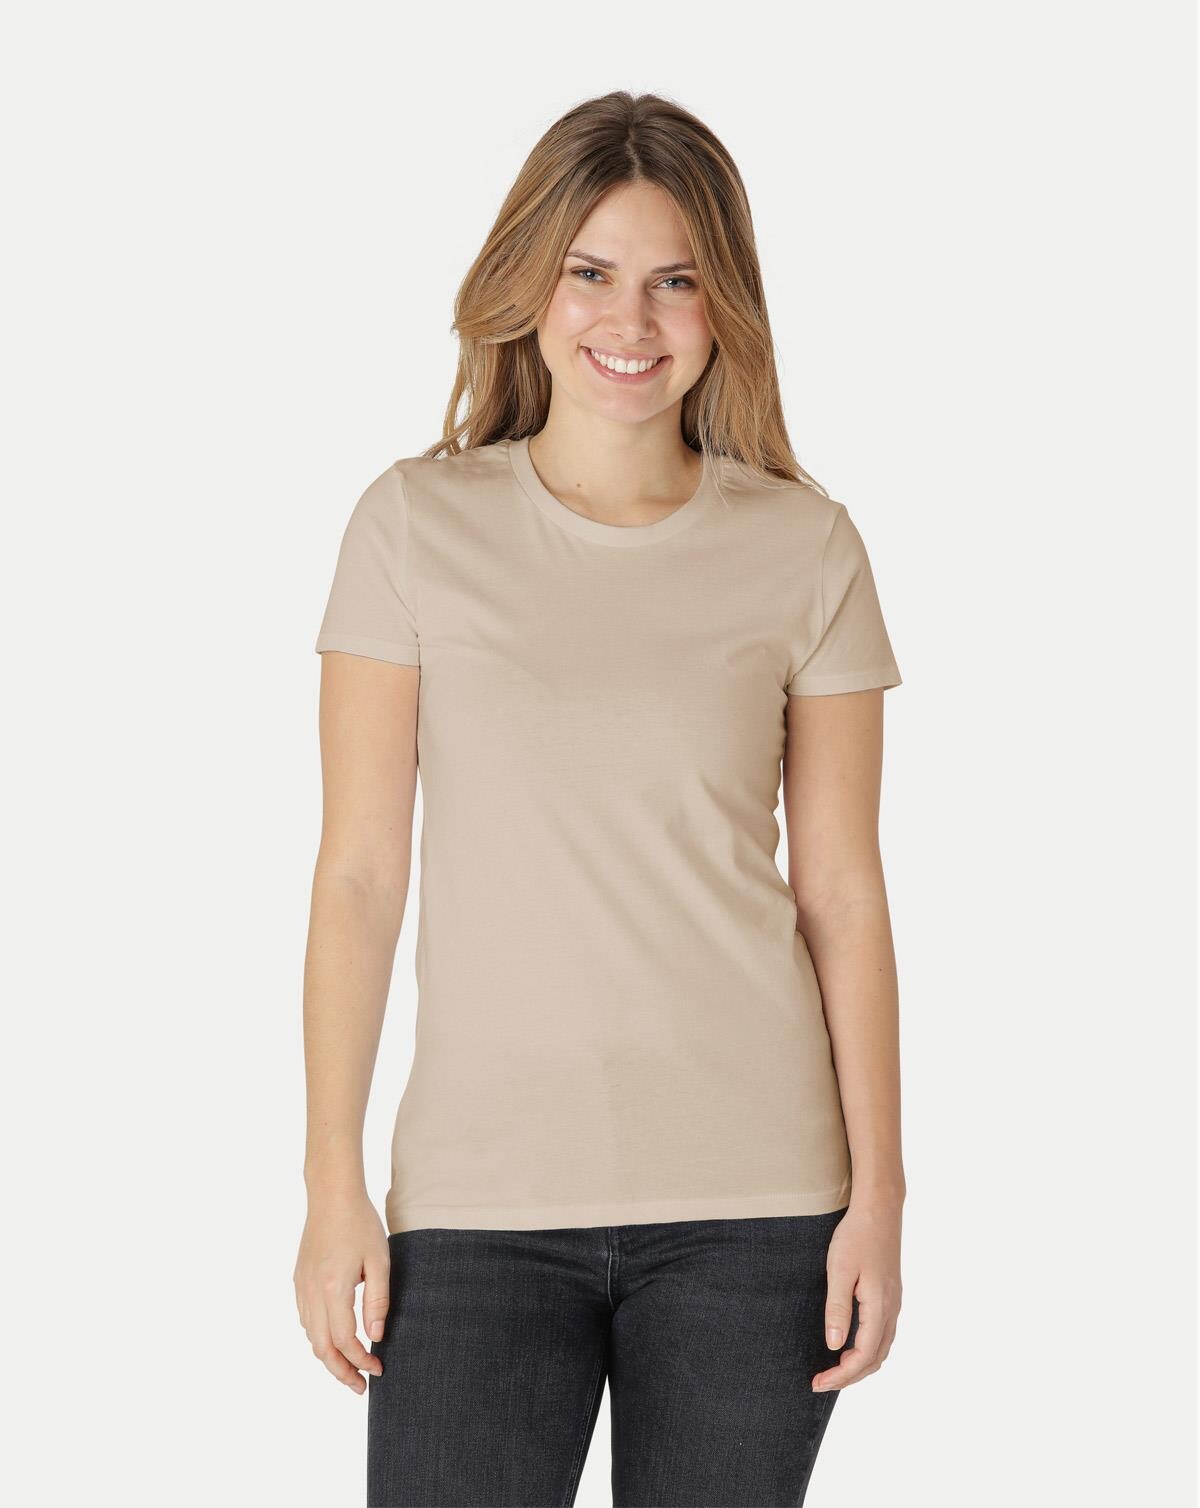 Neutral Økologisk Dame Tætsiddende T-Shirt (Sand, XS)